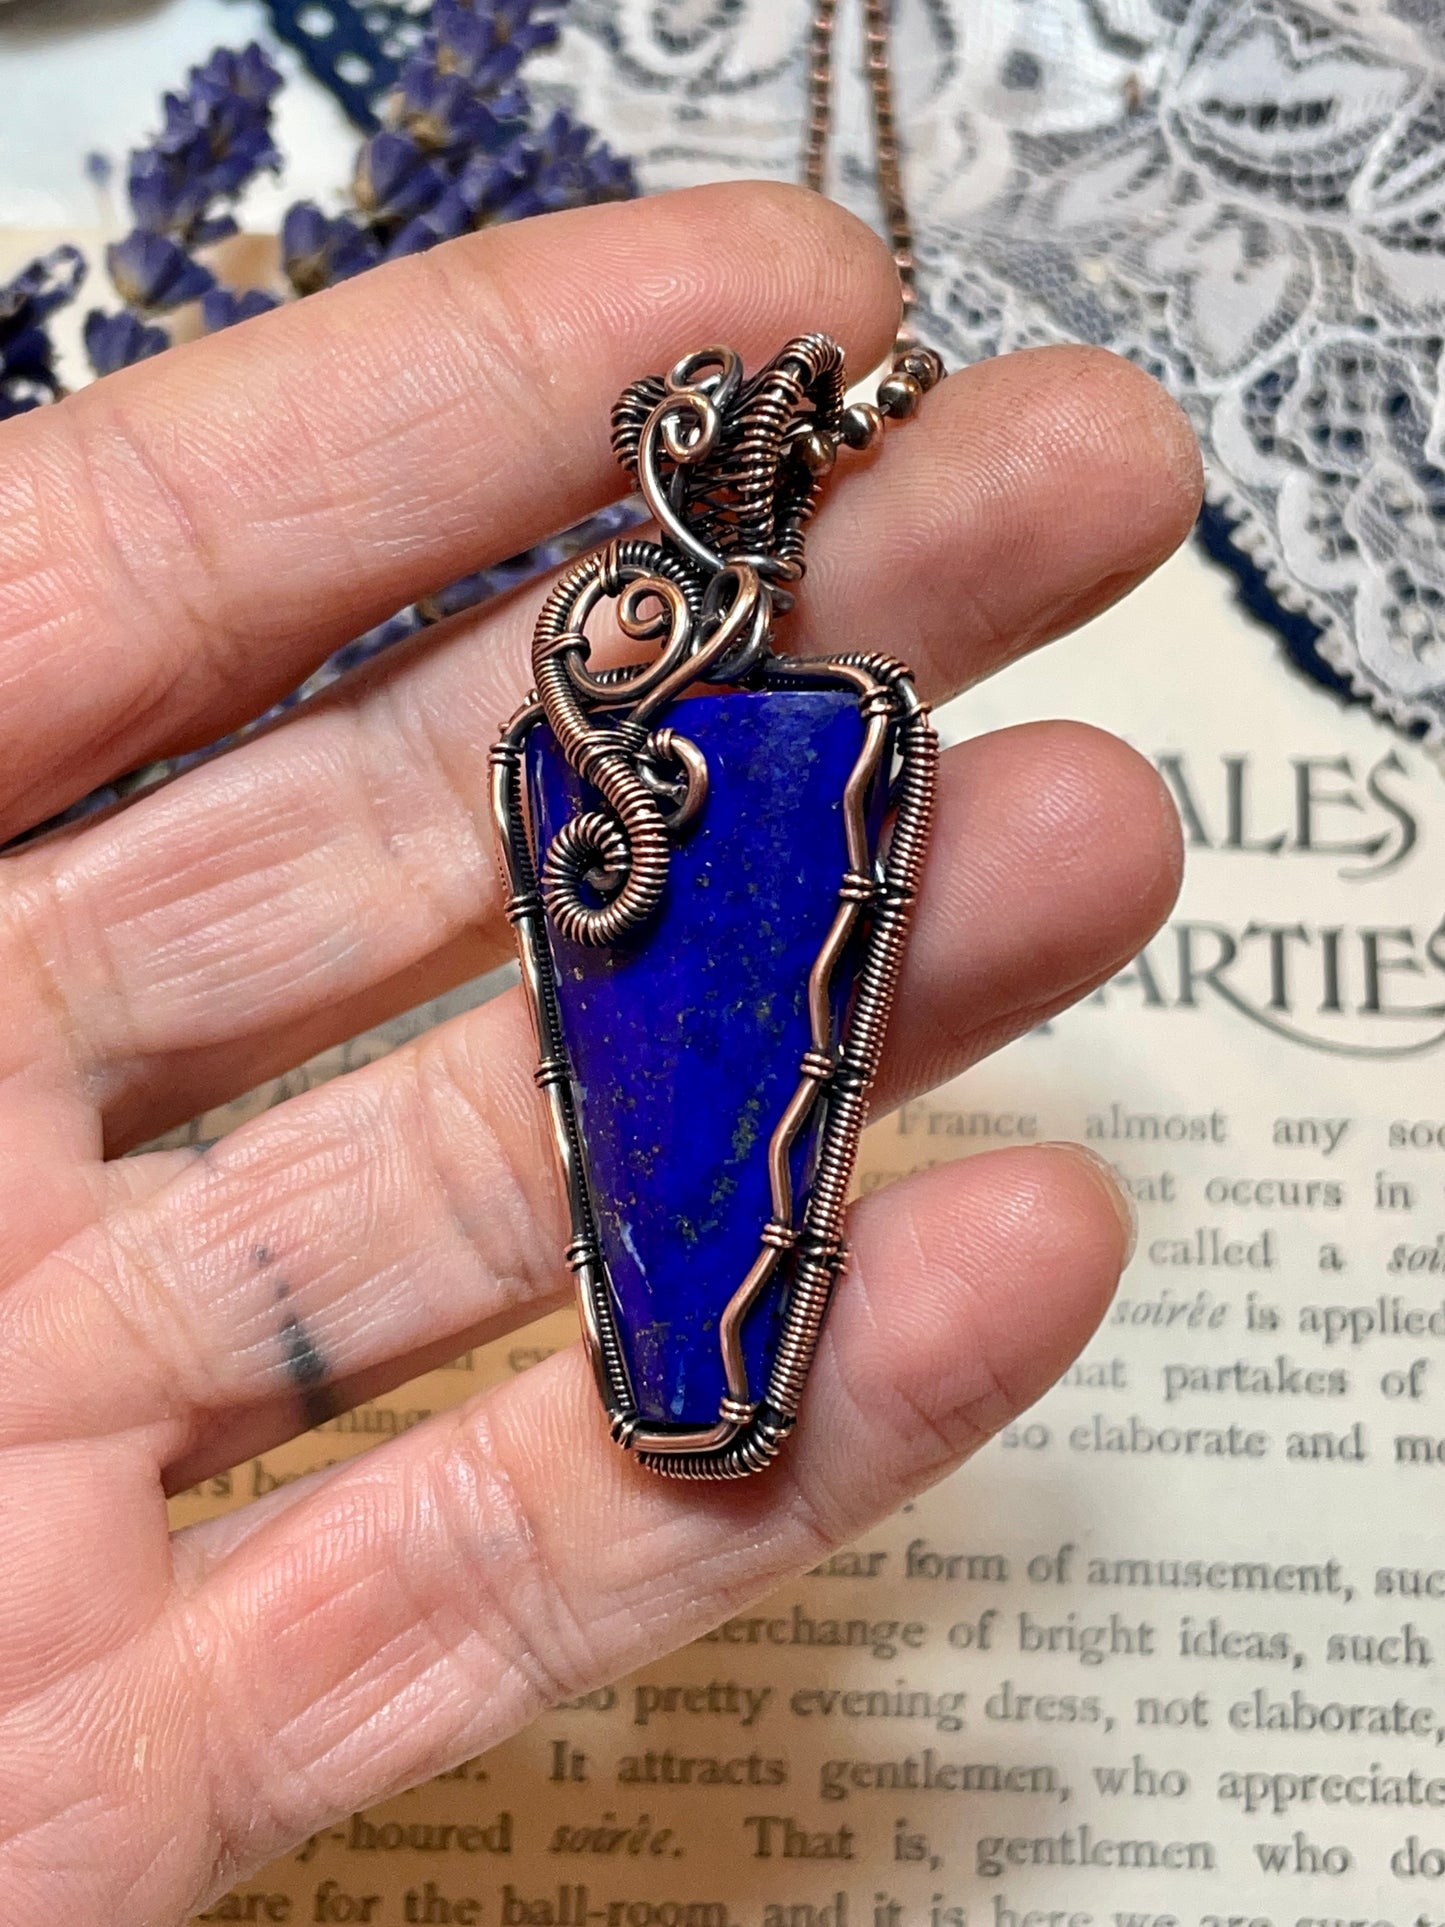 Lapis Lazuli Pendant woven in Copper